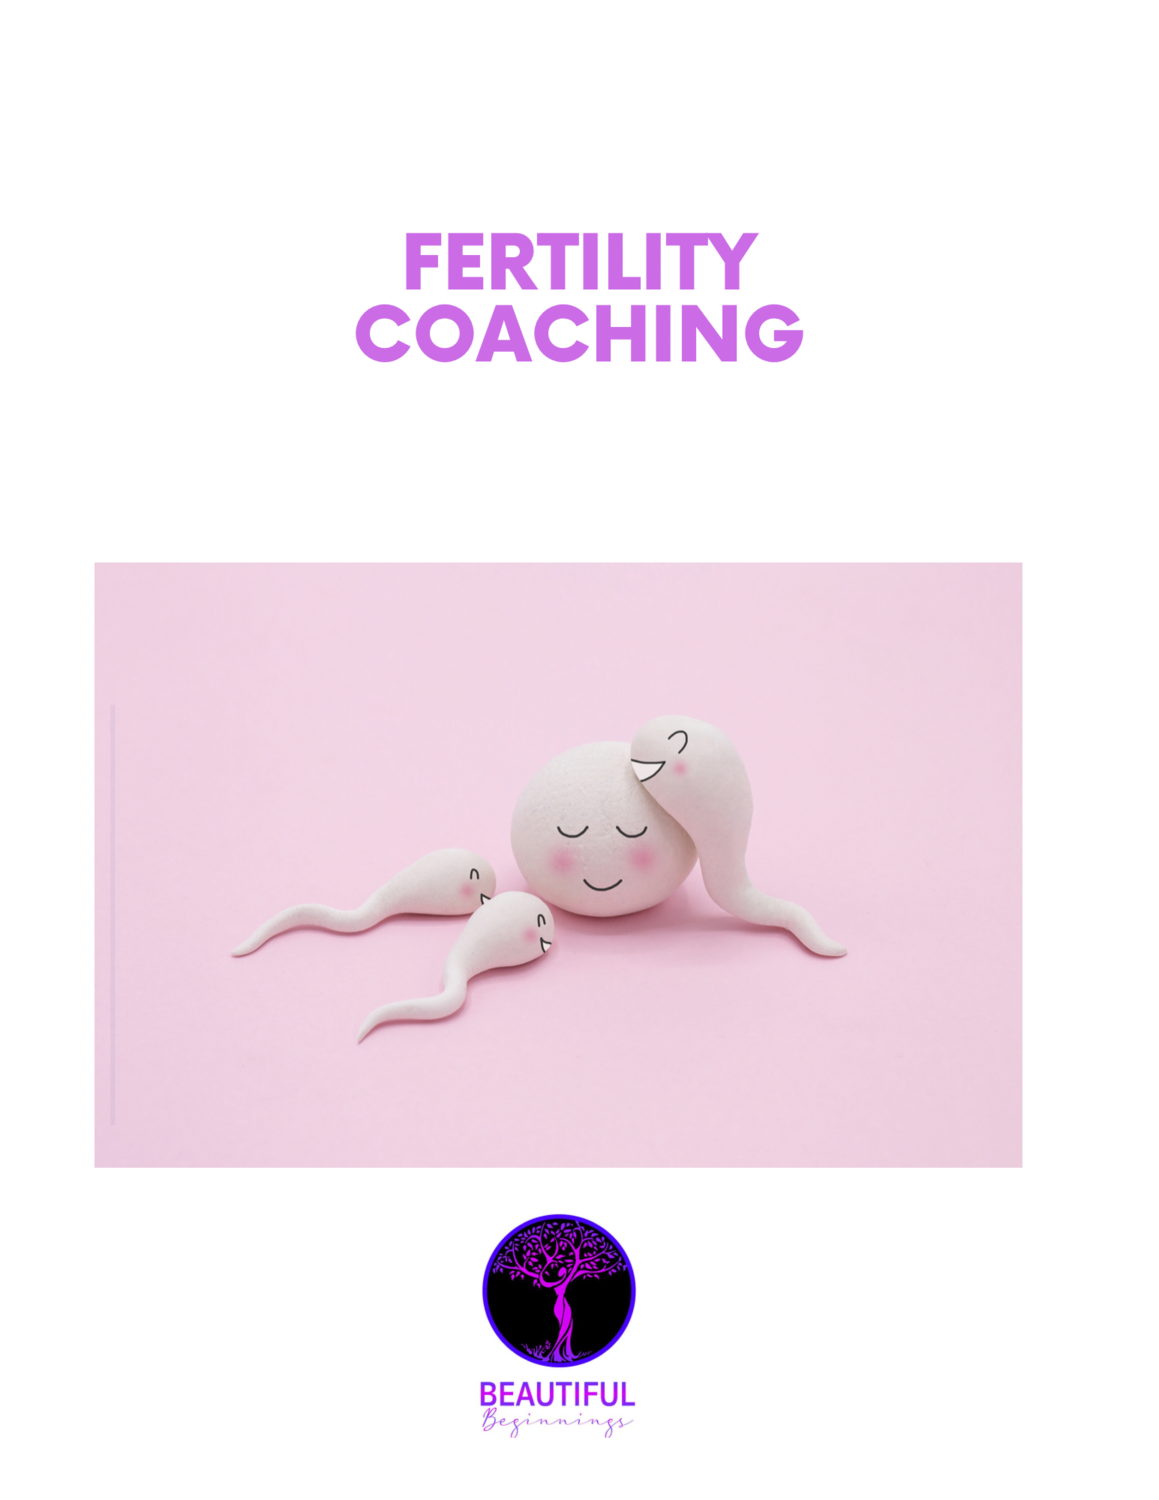 Fertility Coaching Services